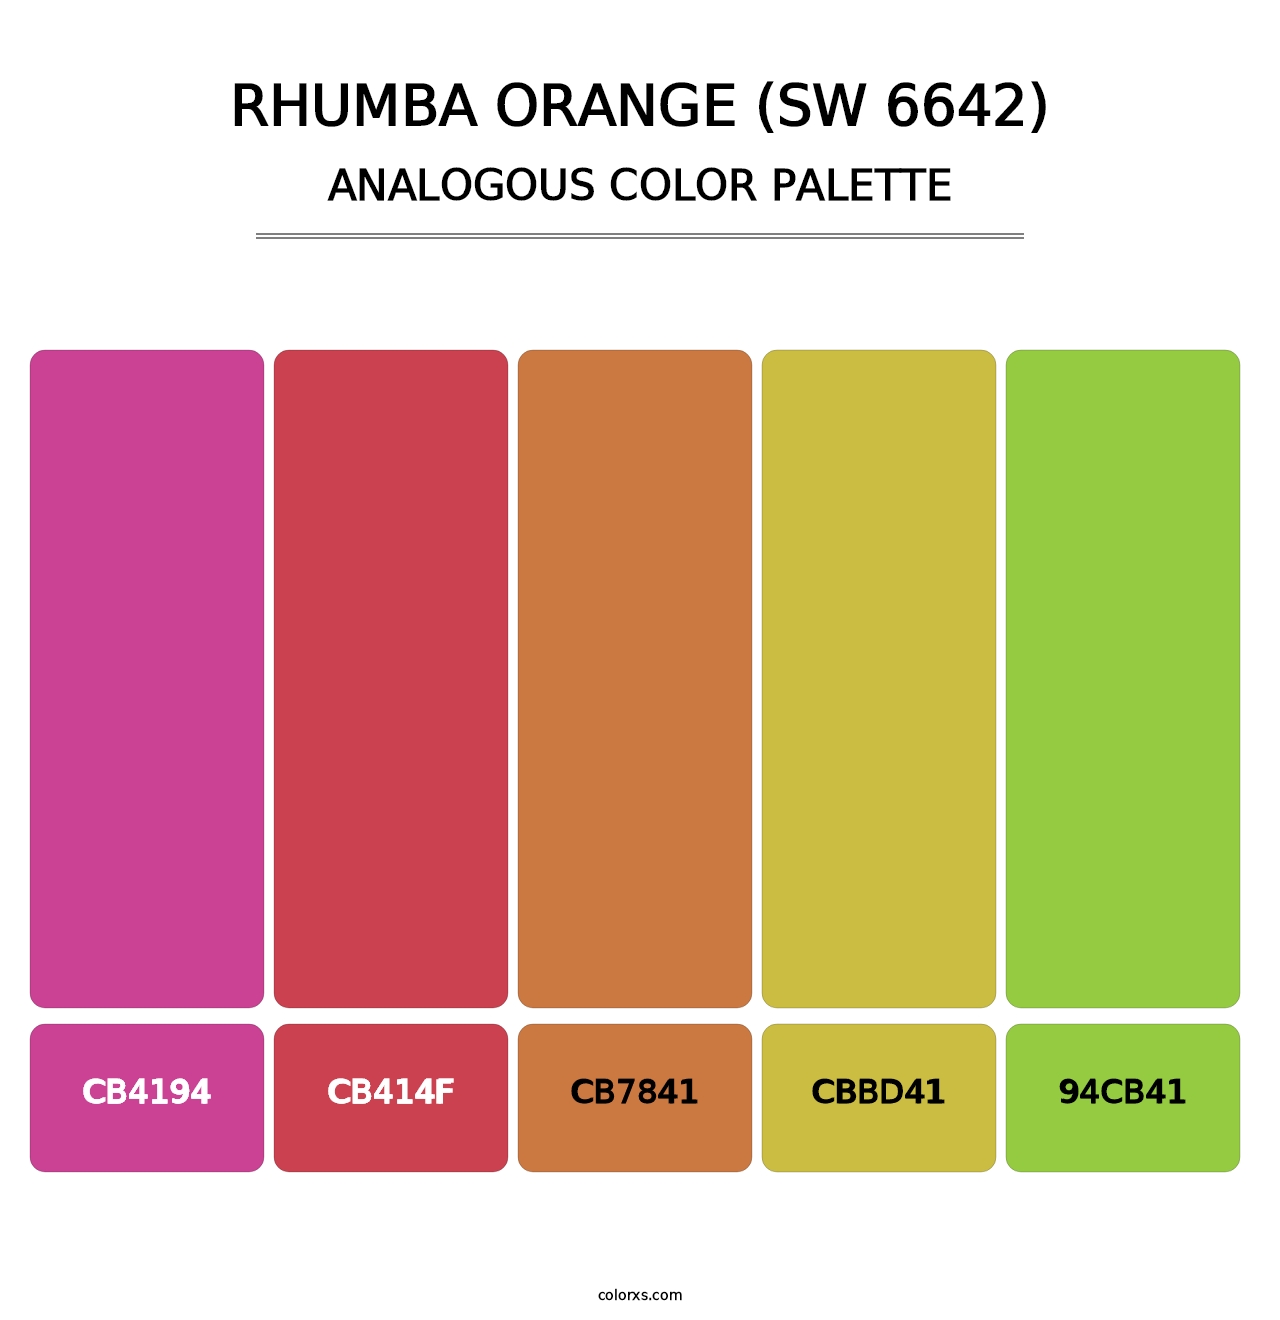 Rhumba Orange (SW 6642) - Analogous Color Palette